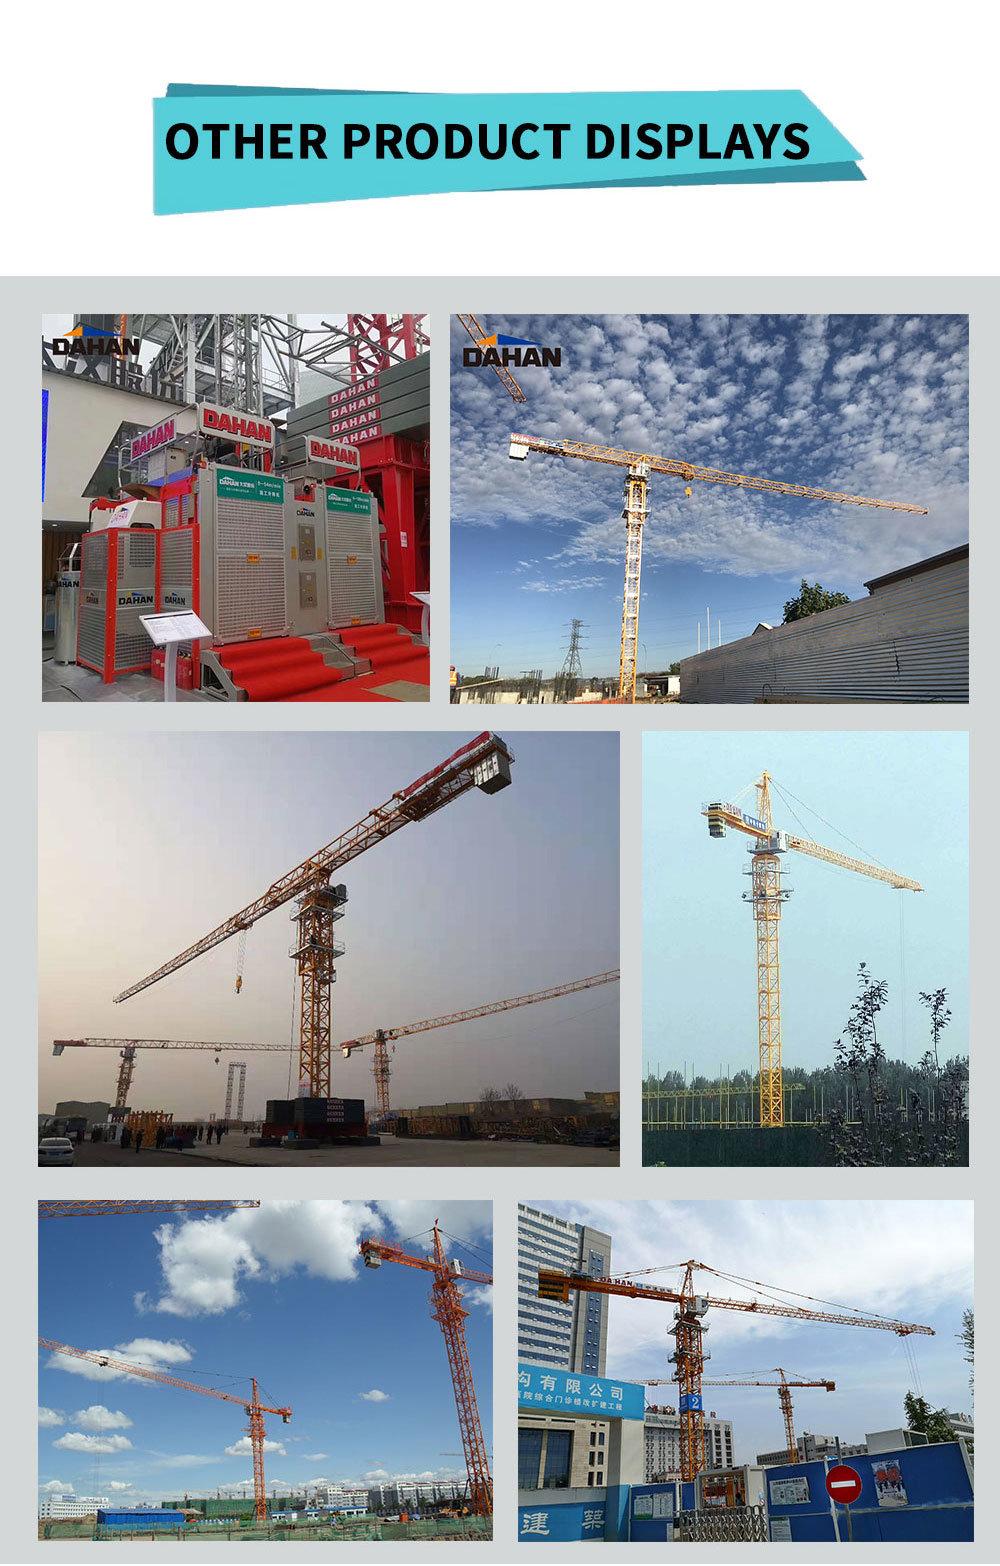 Qtz250 (7032) 12t Flat Top Tower Crane Dahan Made-in-China